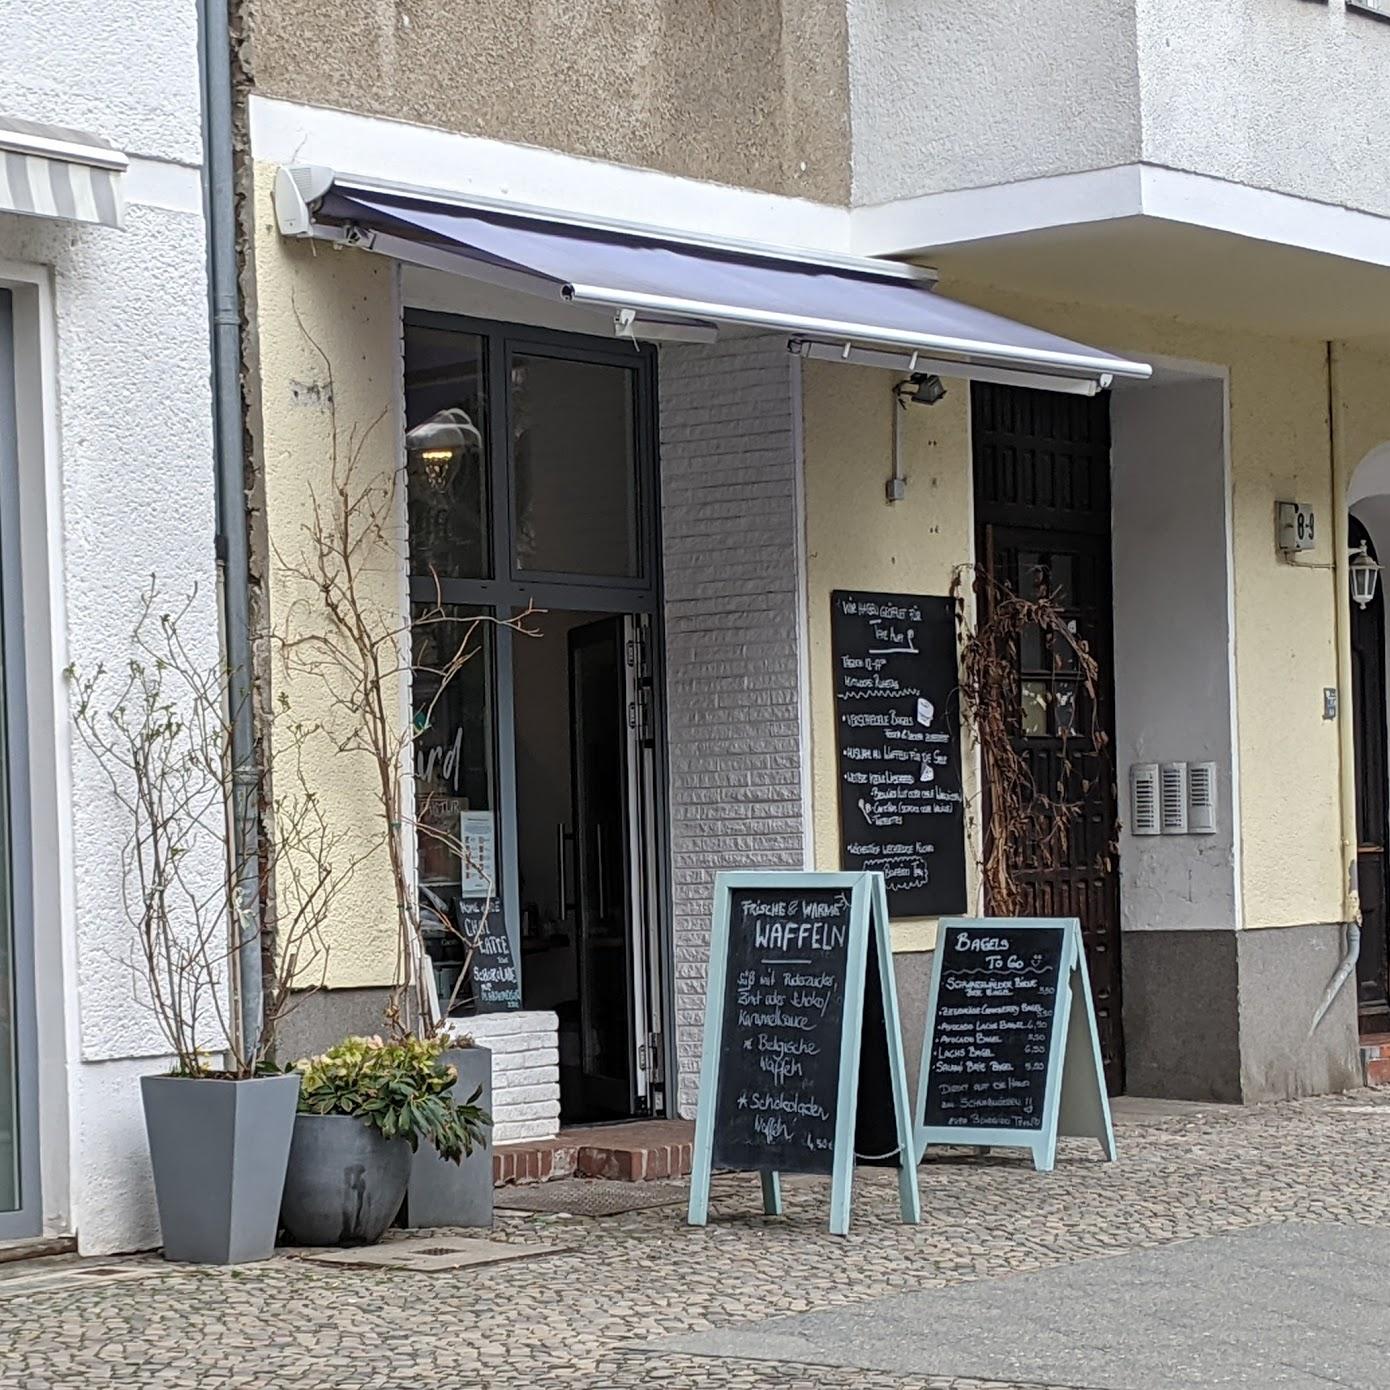 Restaurant "Bluebirds" in Berlin